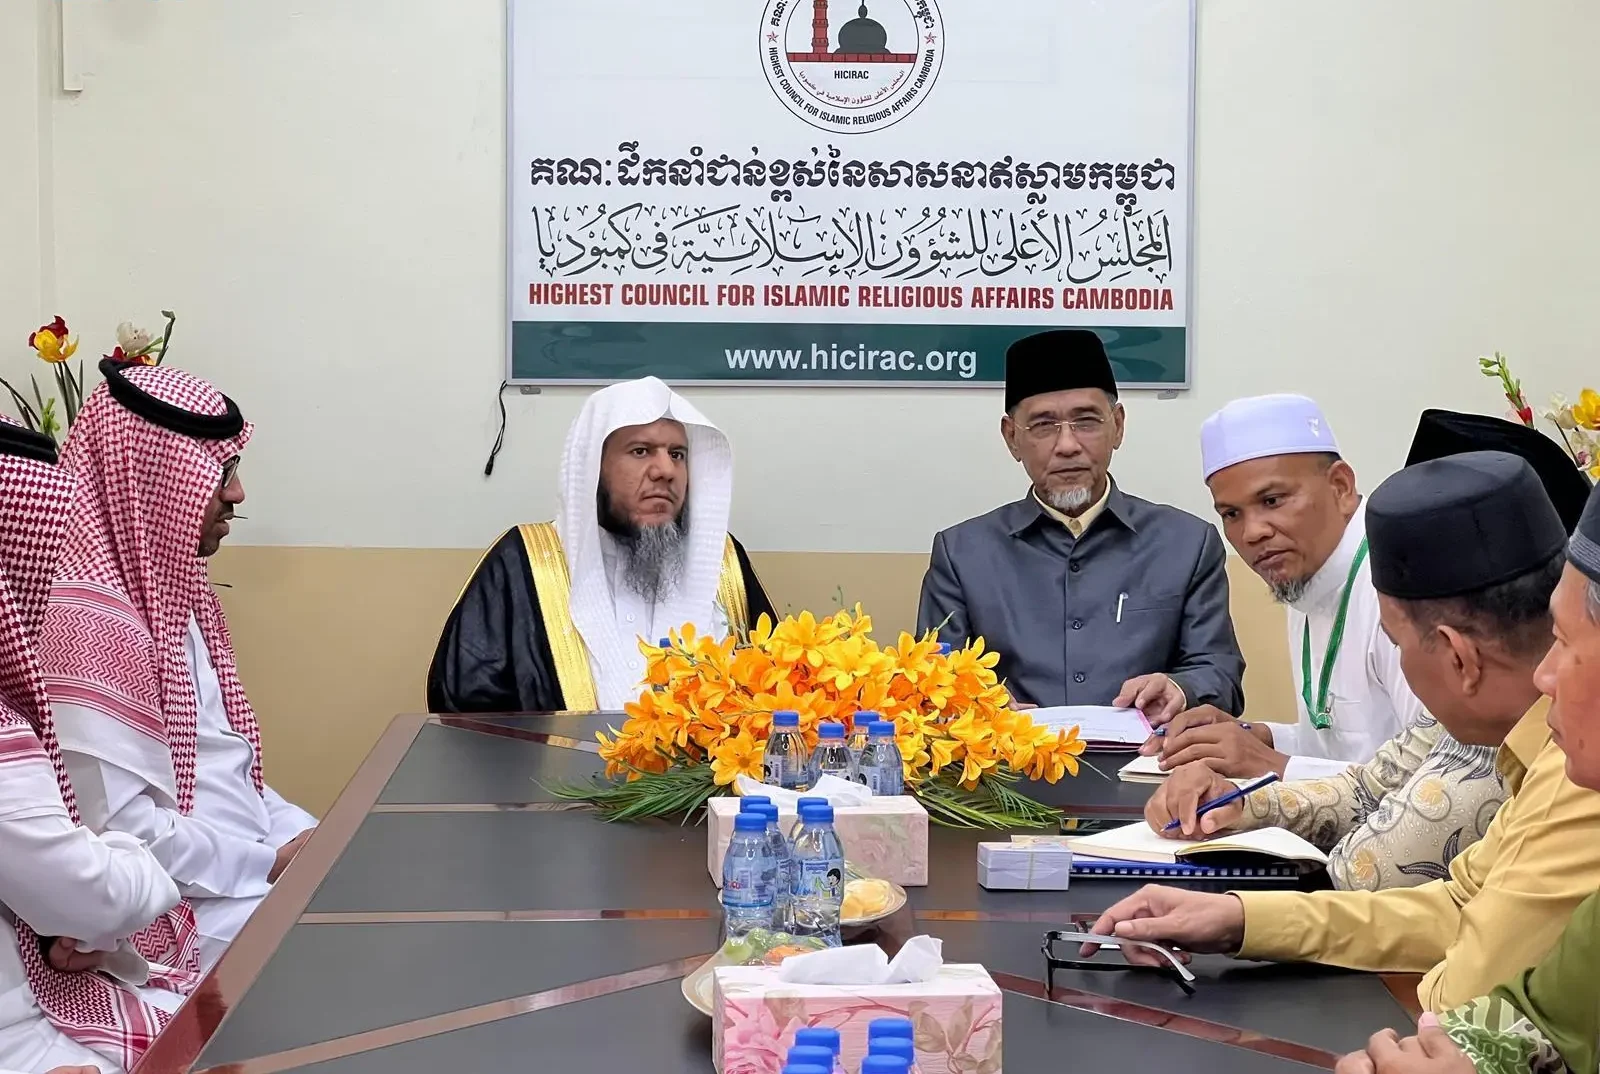 Cambodia: Saudi Arabia Pioneers Islamic World with Appreciated Efforts in Serving Muslims